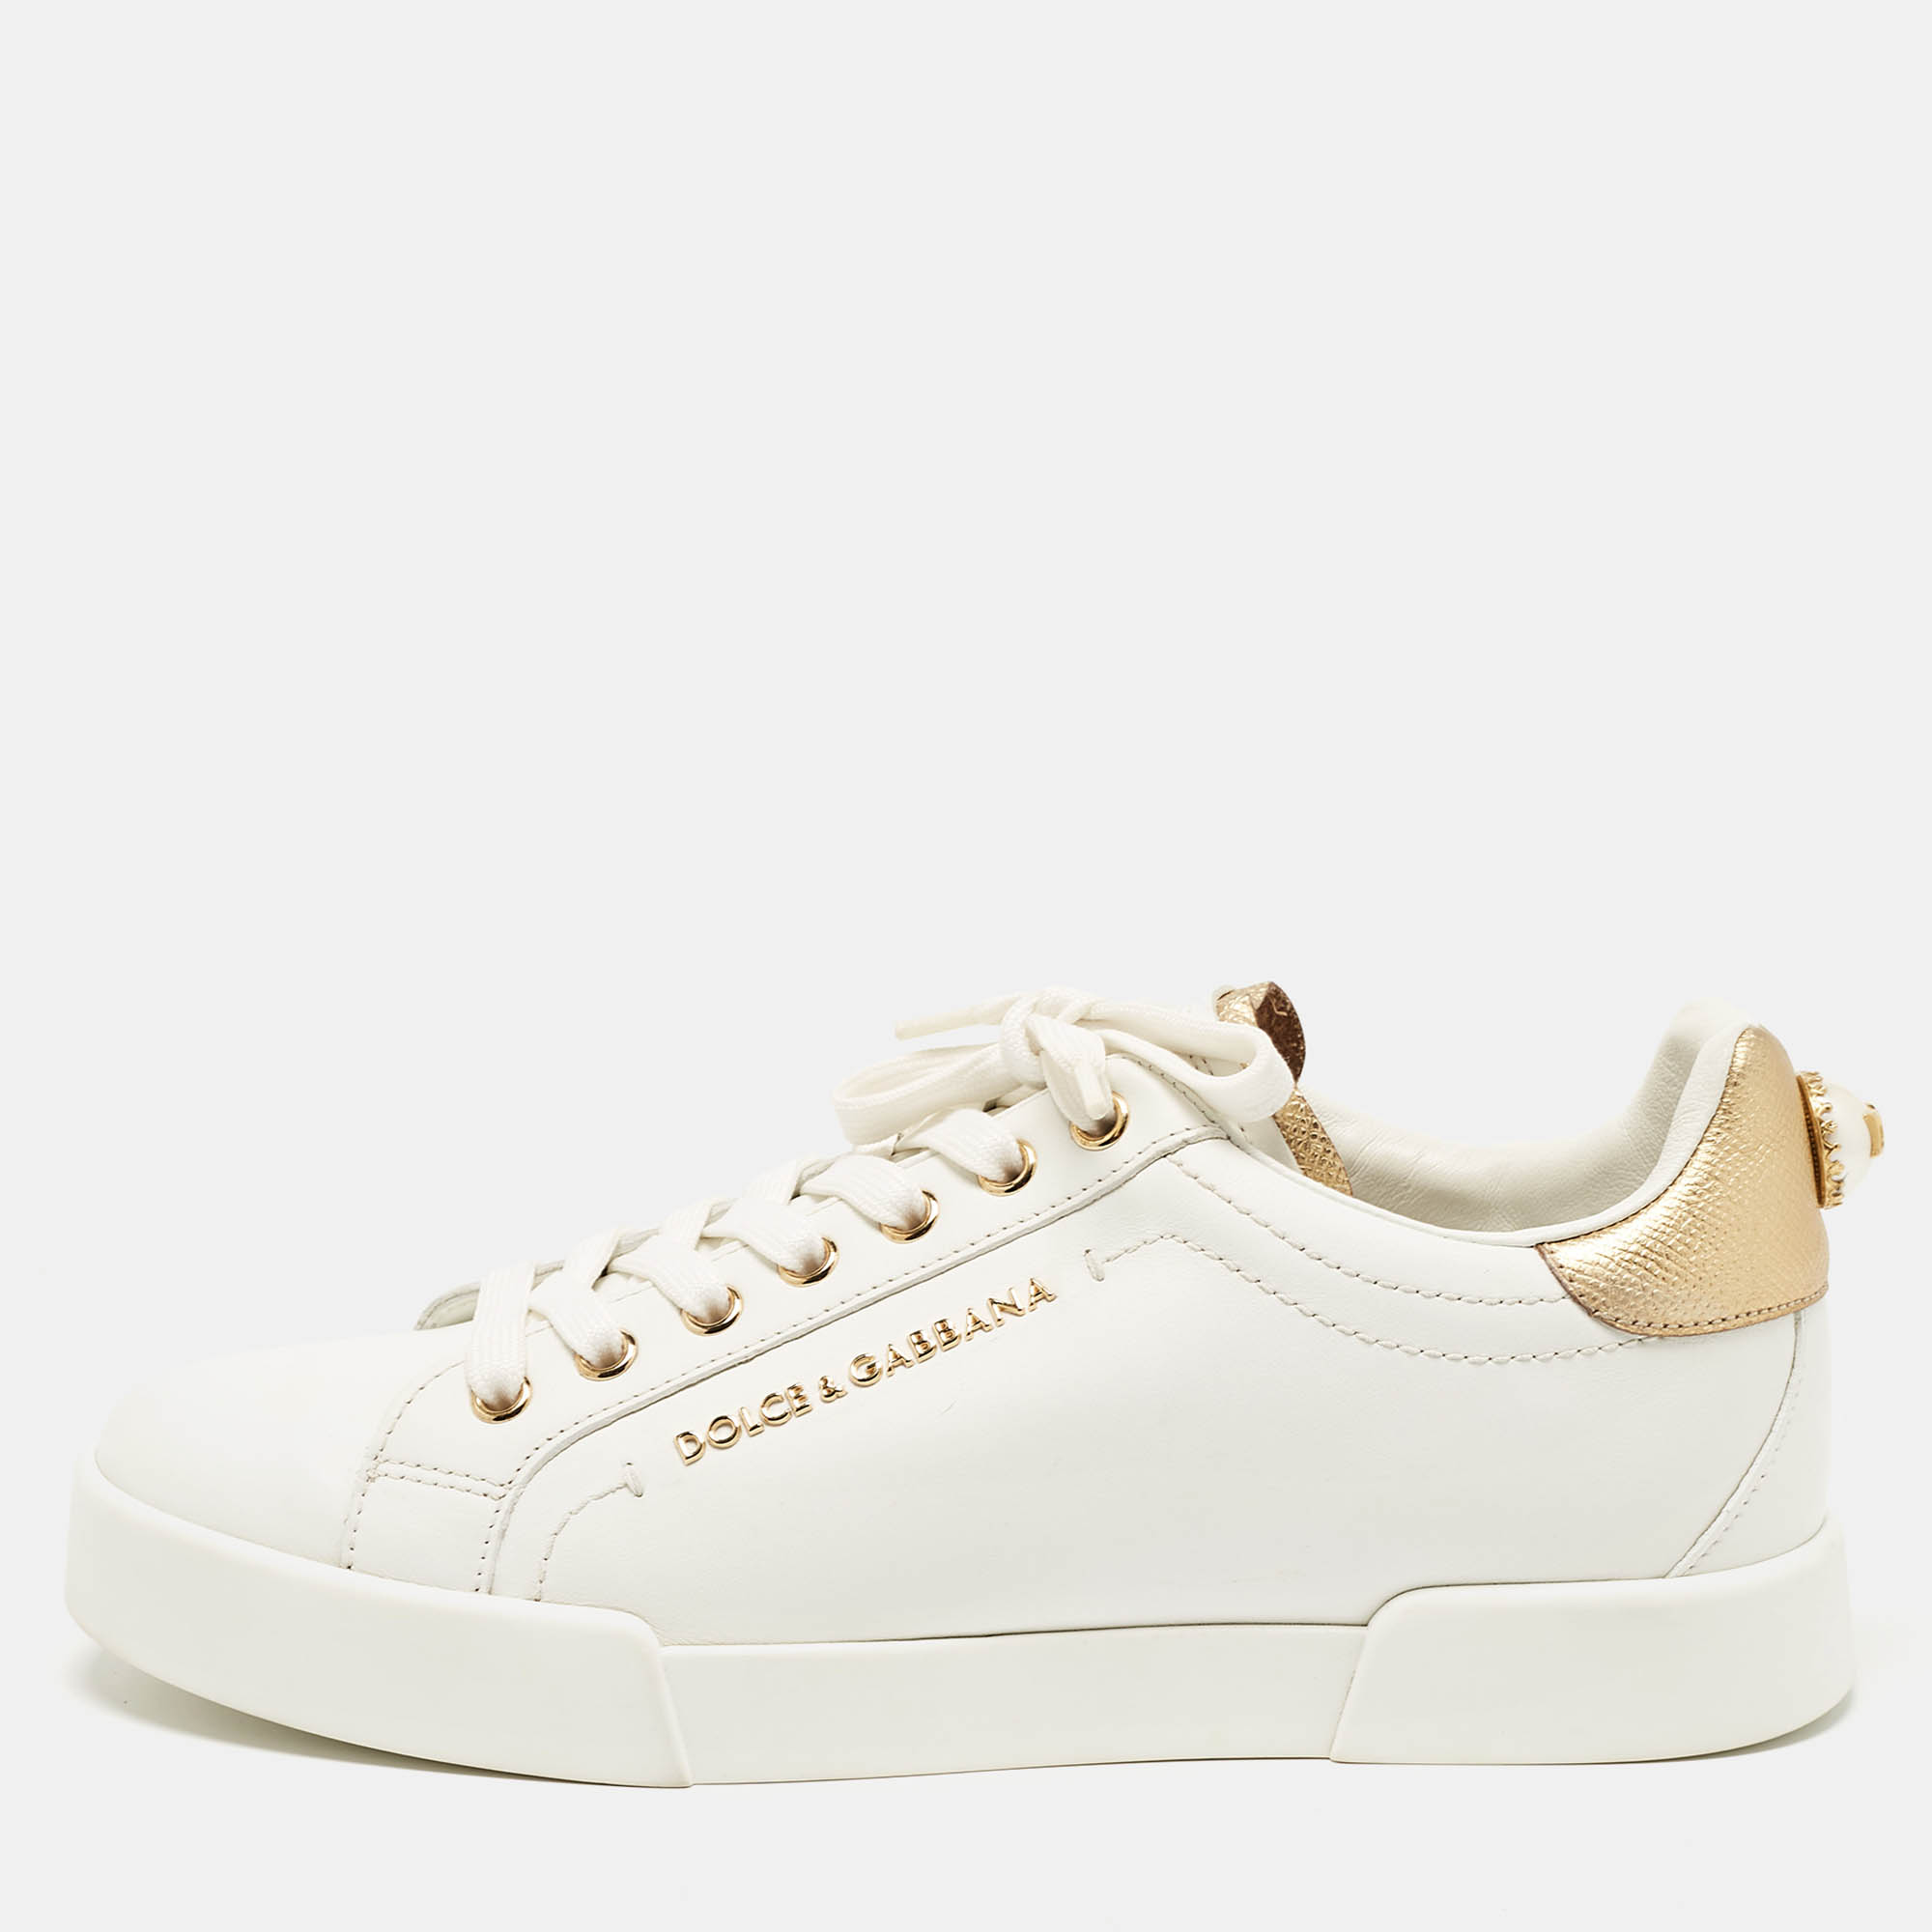 Dolce & Gabbana White Leather Pearl Embellished Portofino Sneakers Size 39